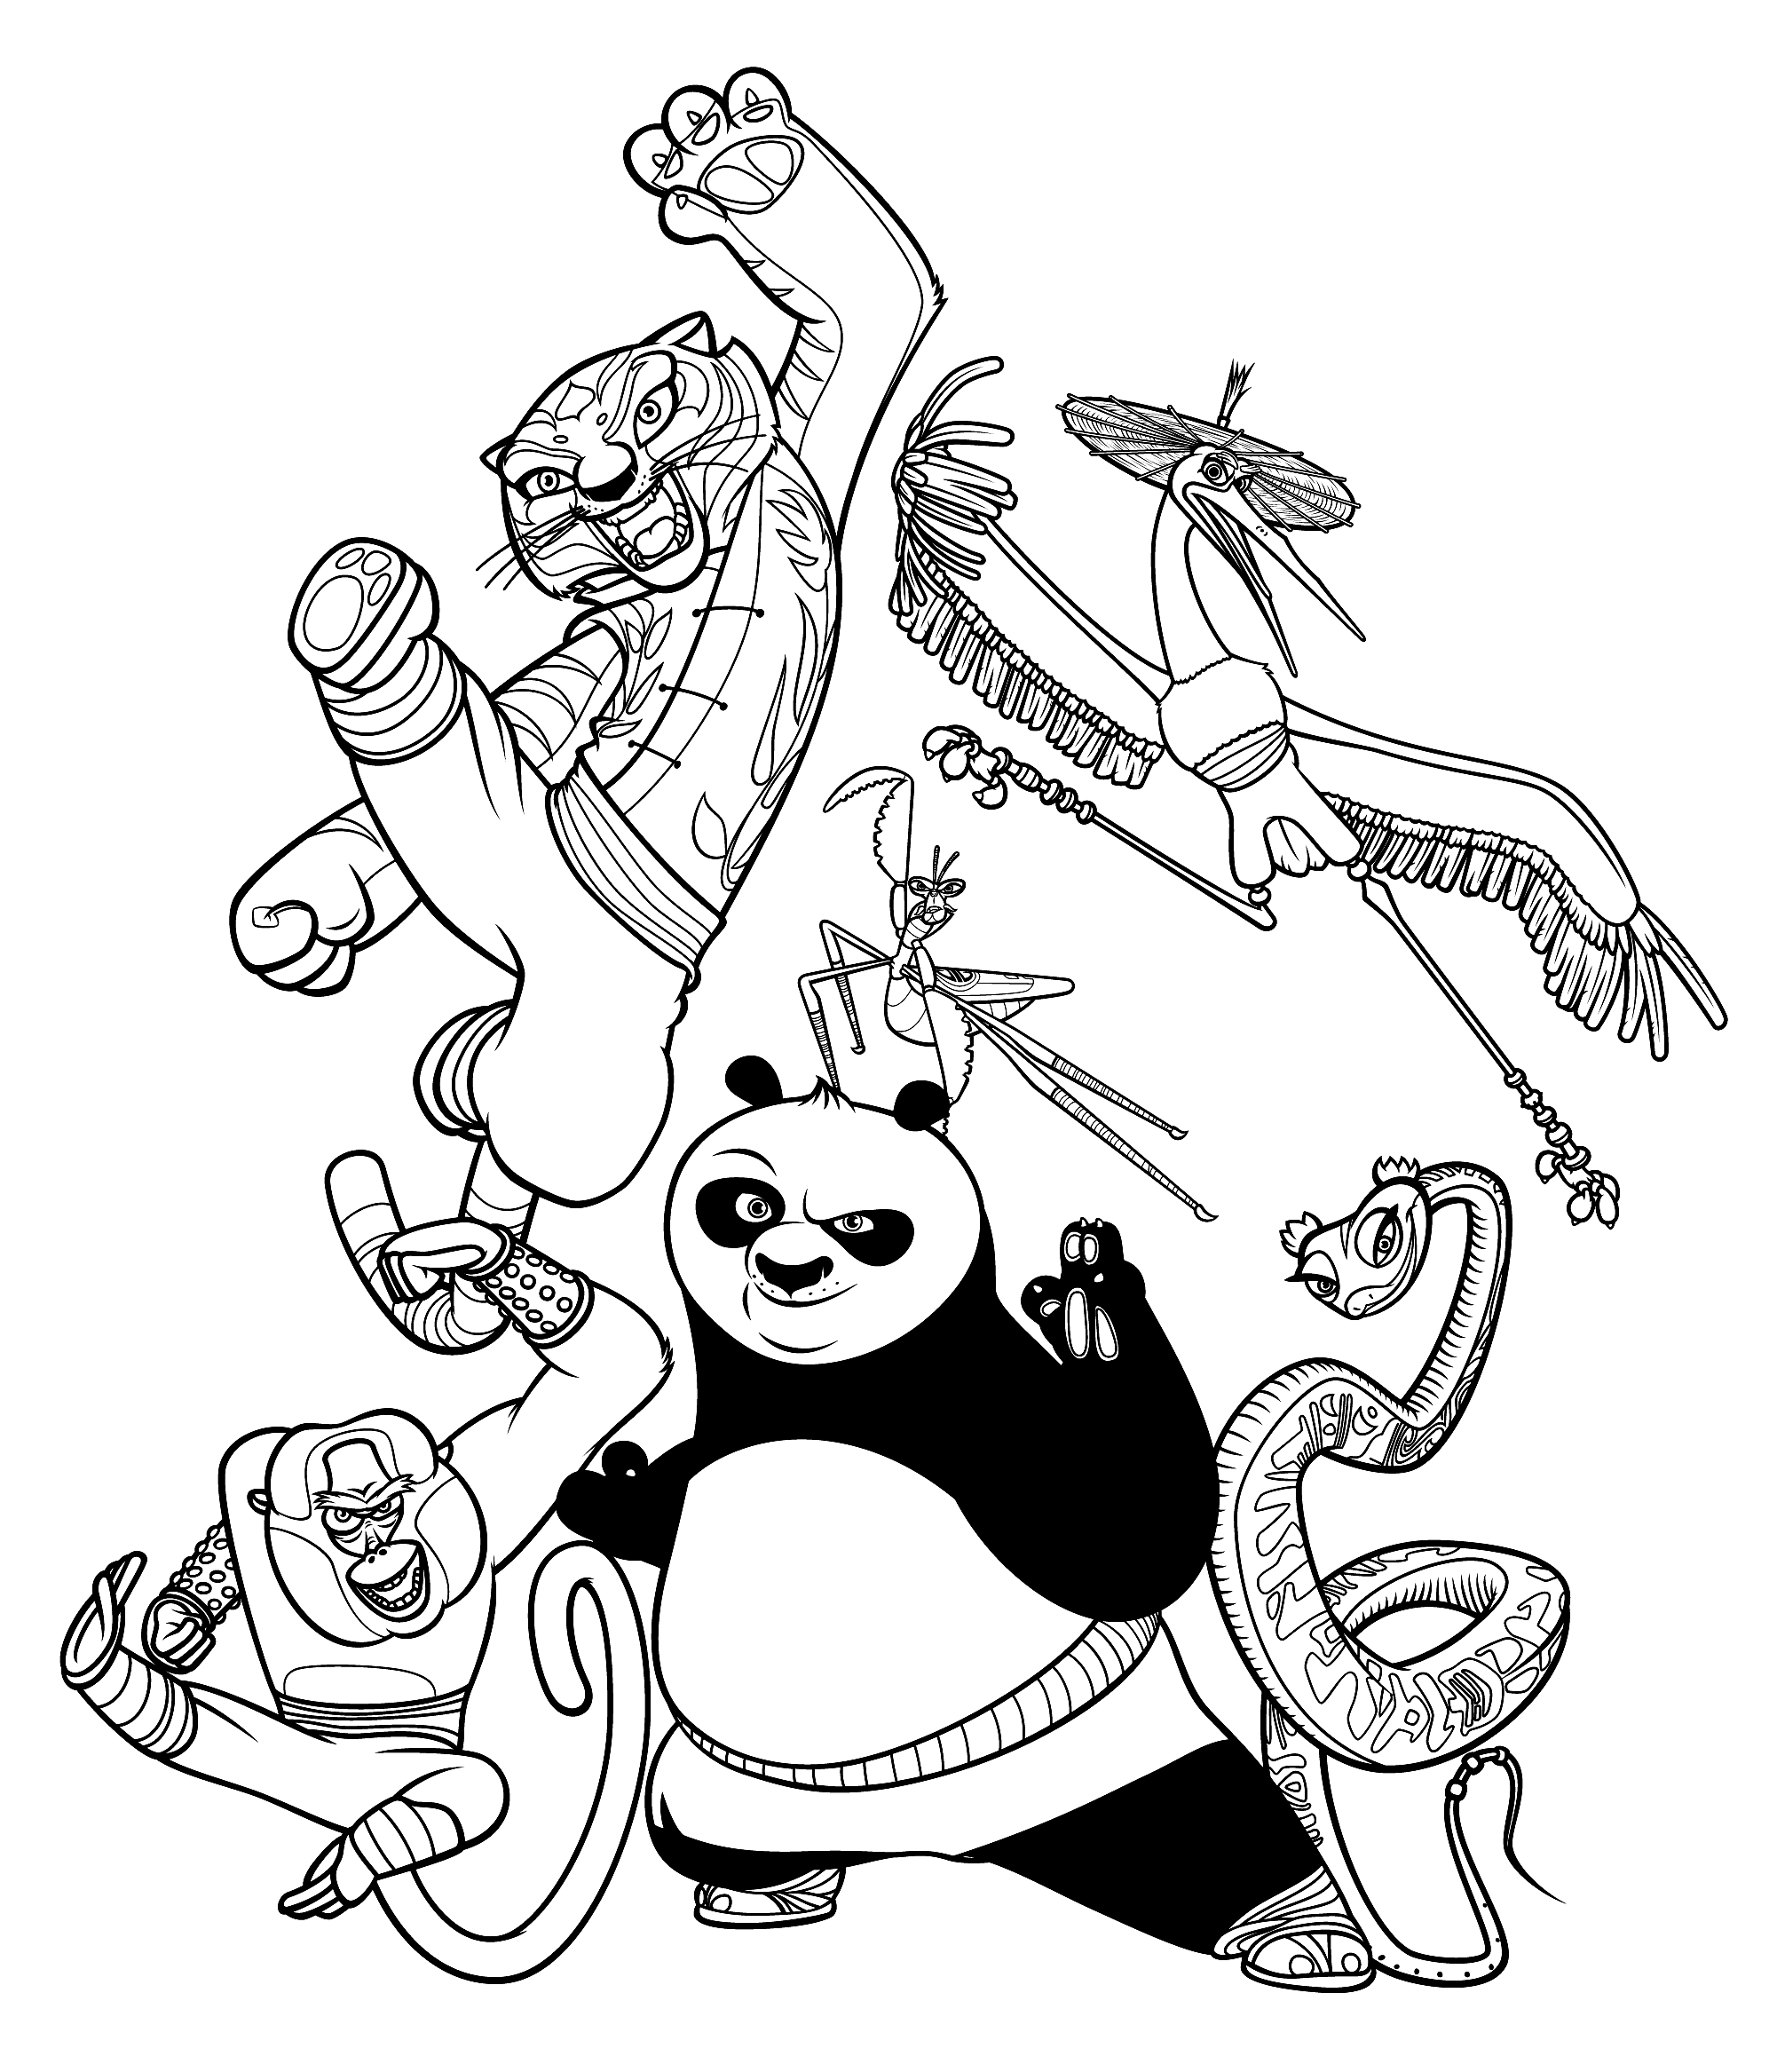 Coloriage Kung fu panda gratuit